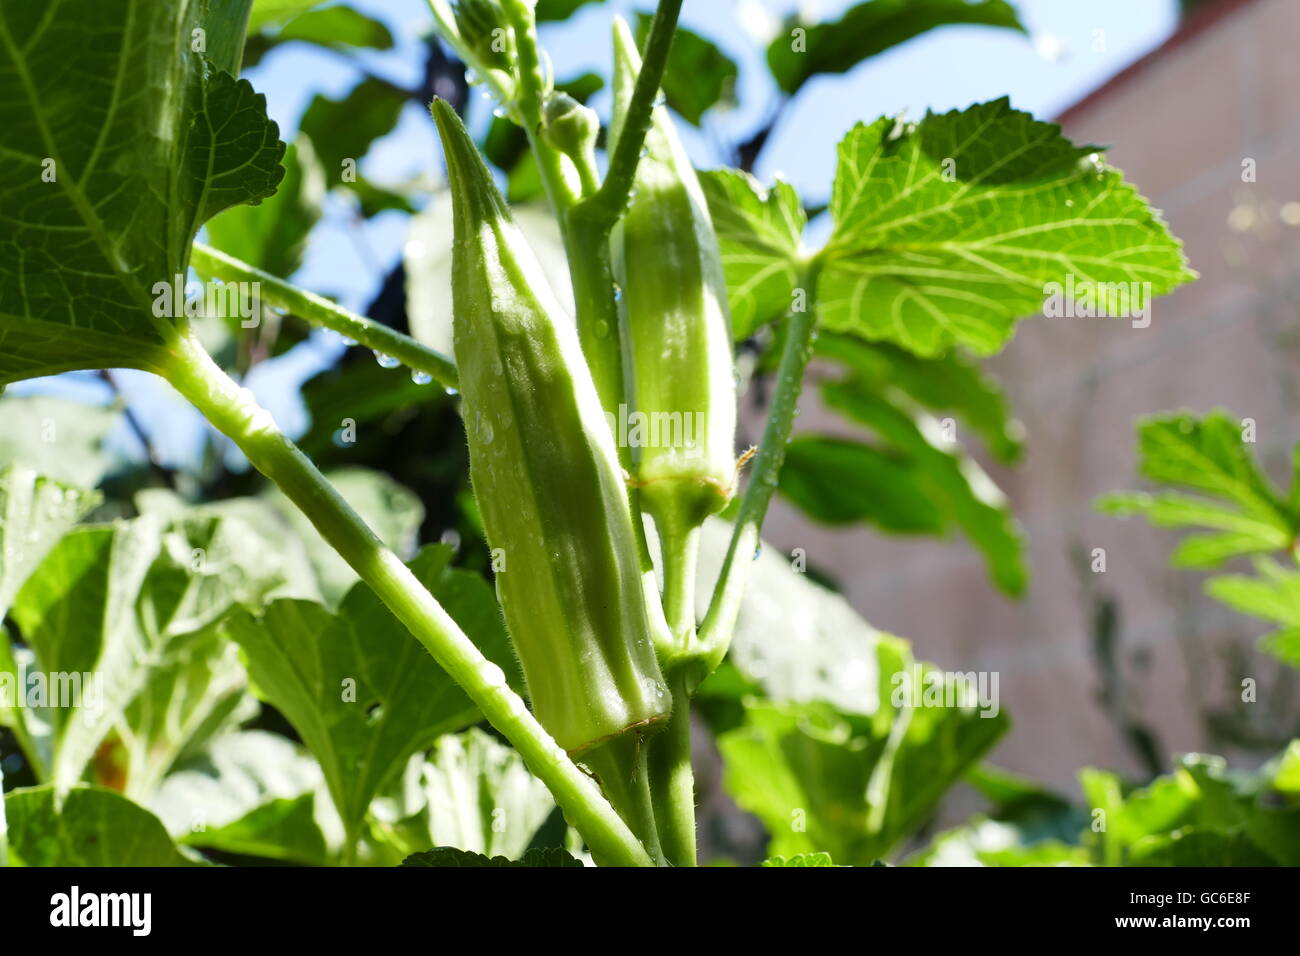 Growing Okra in farm garden at Los Angeles Stock Photo